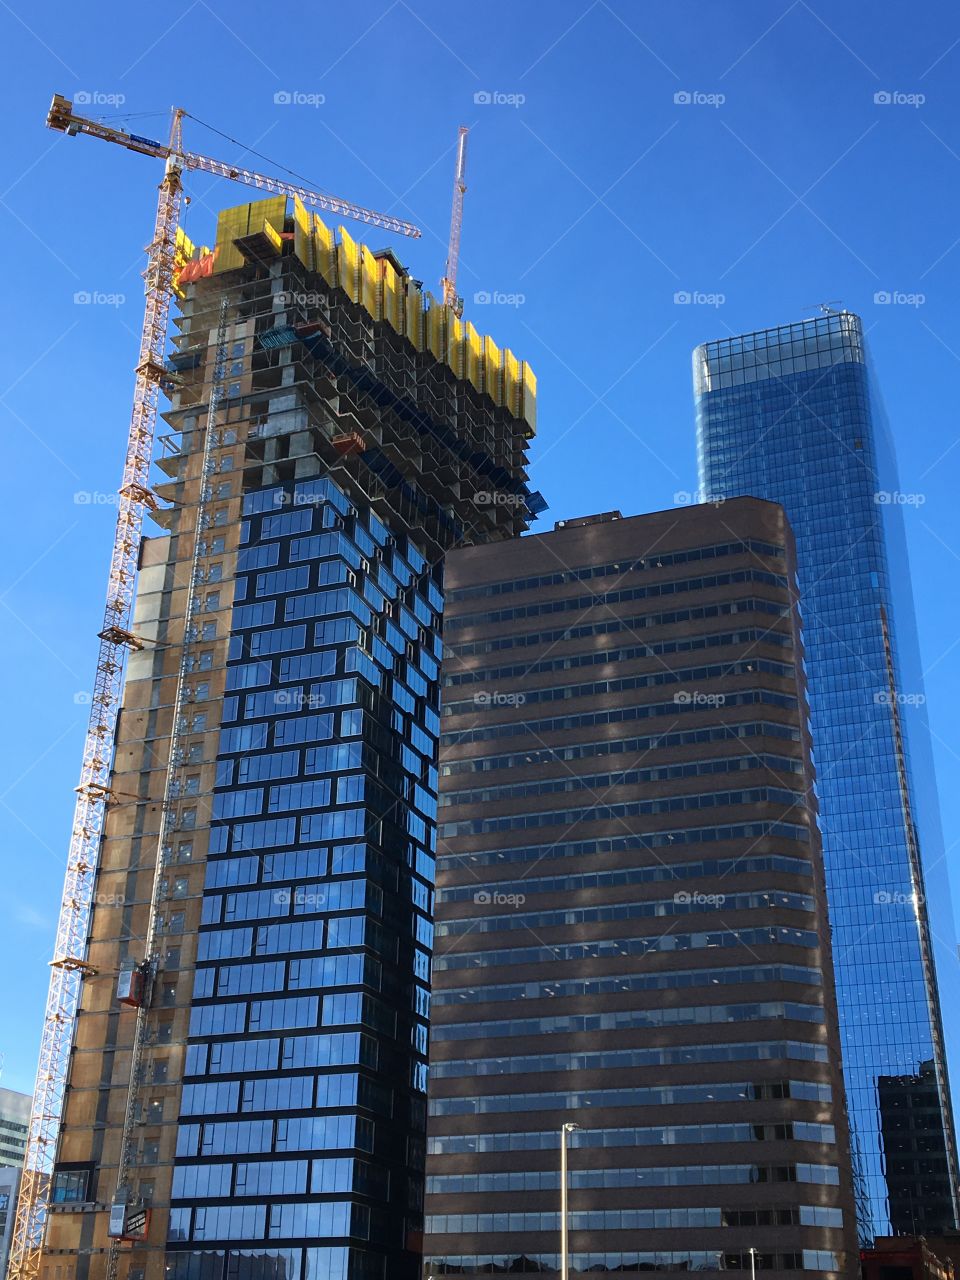 Building under construction 